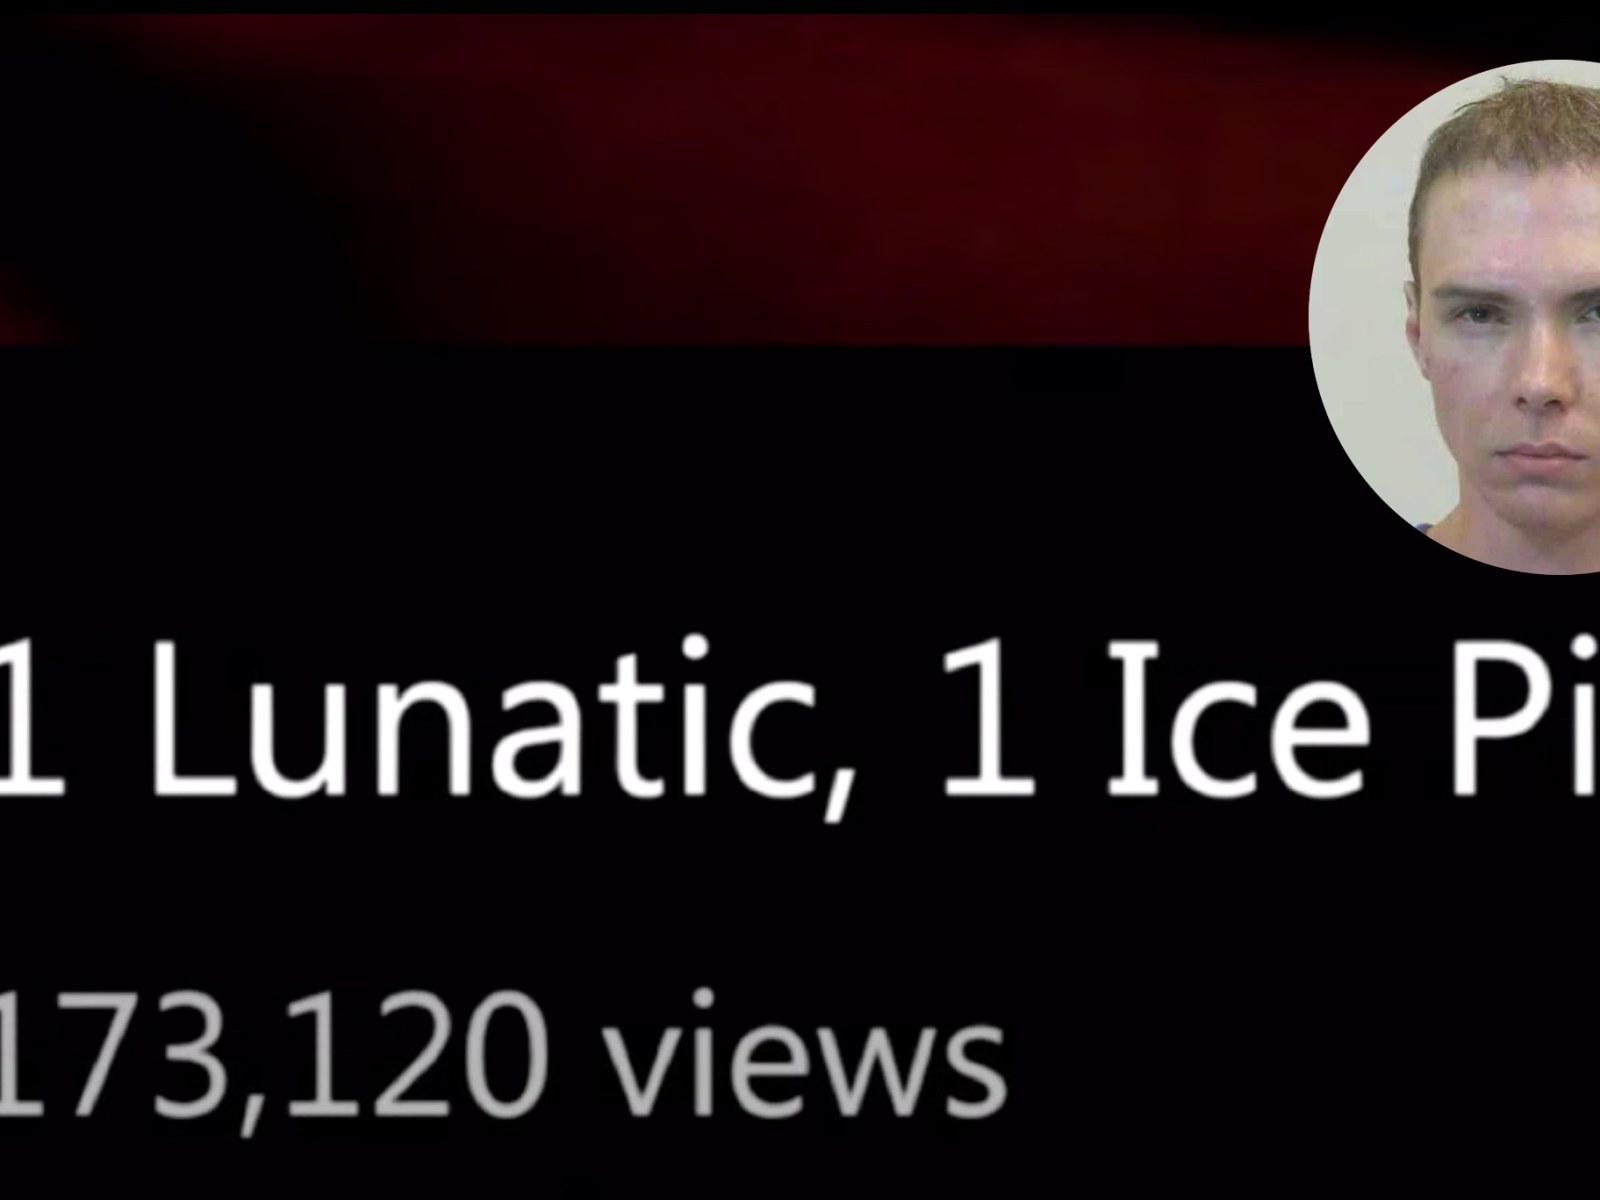 Luka magnotta killed jun lin video - 1 Lunatic 1 Icepick Video: The Gory Lu...